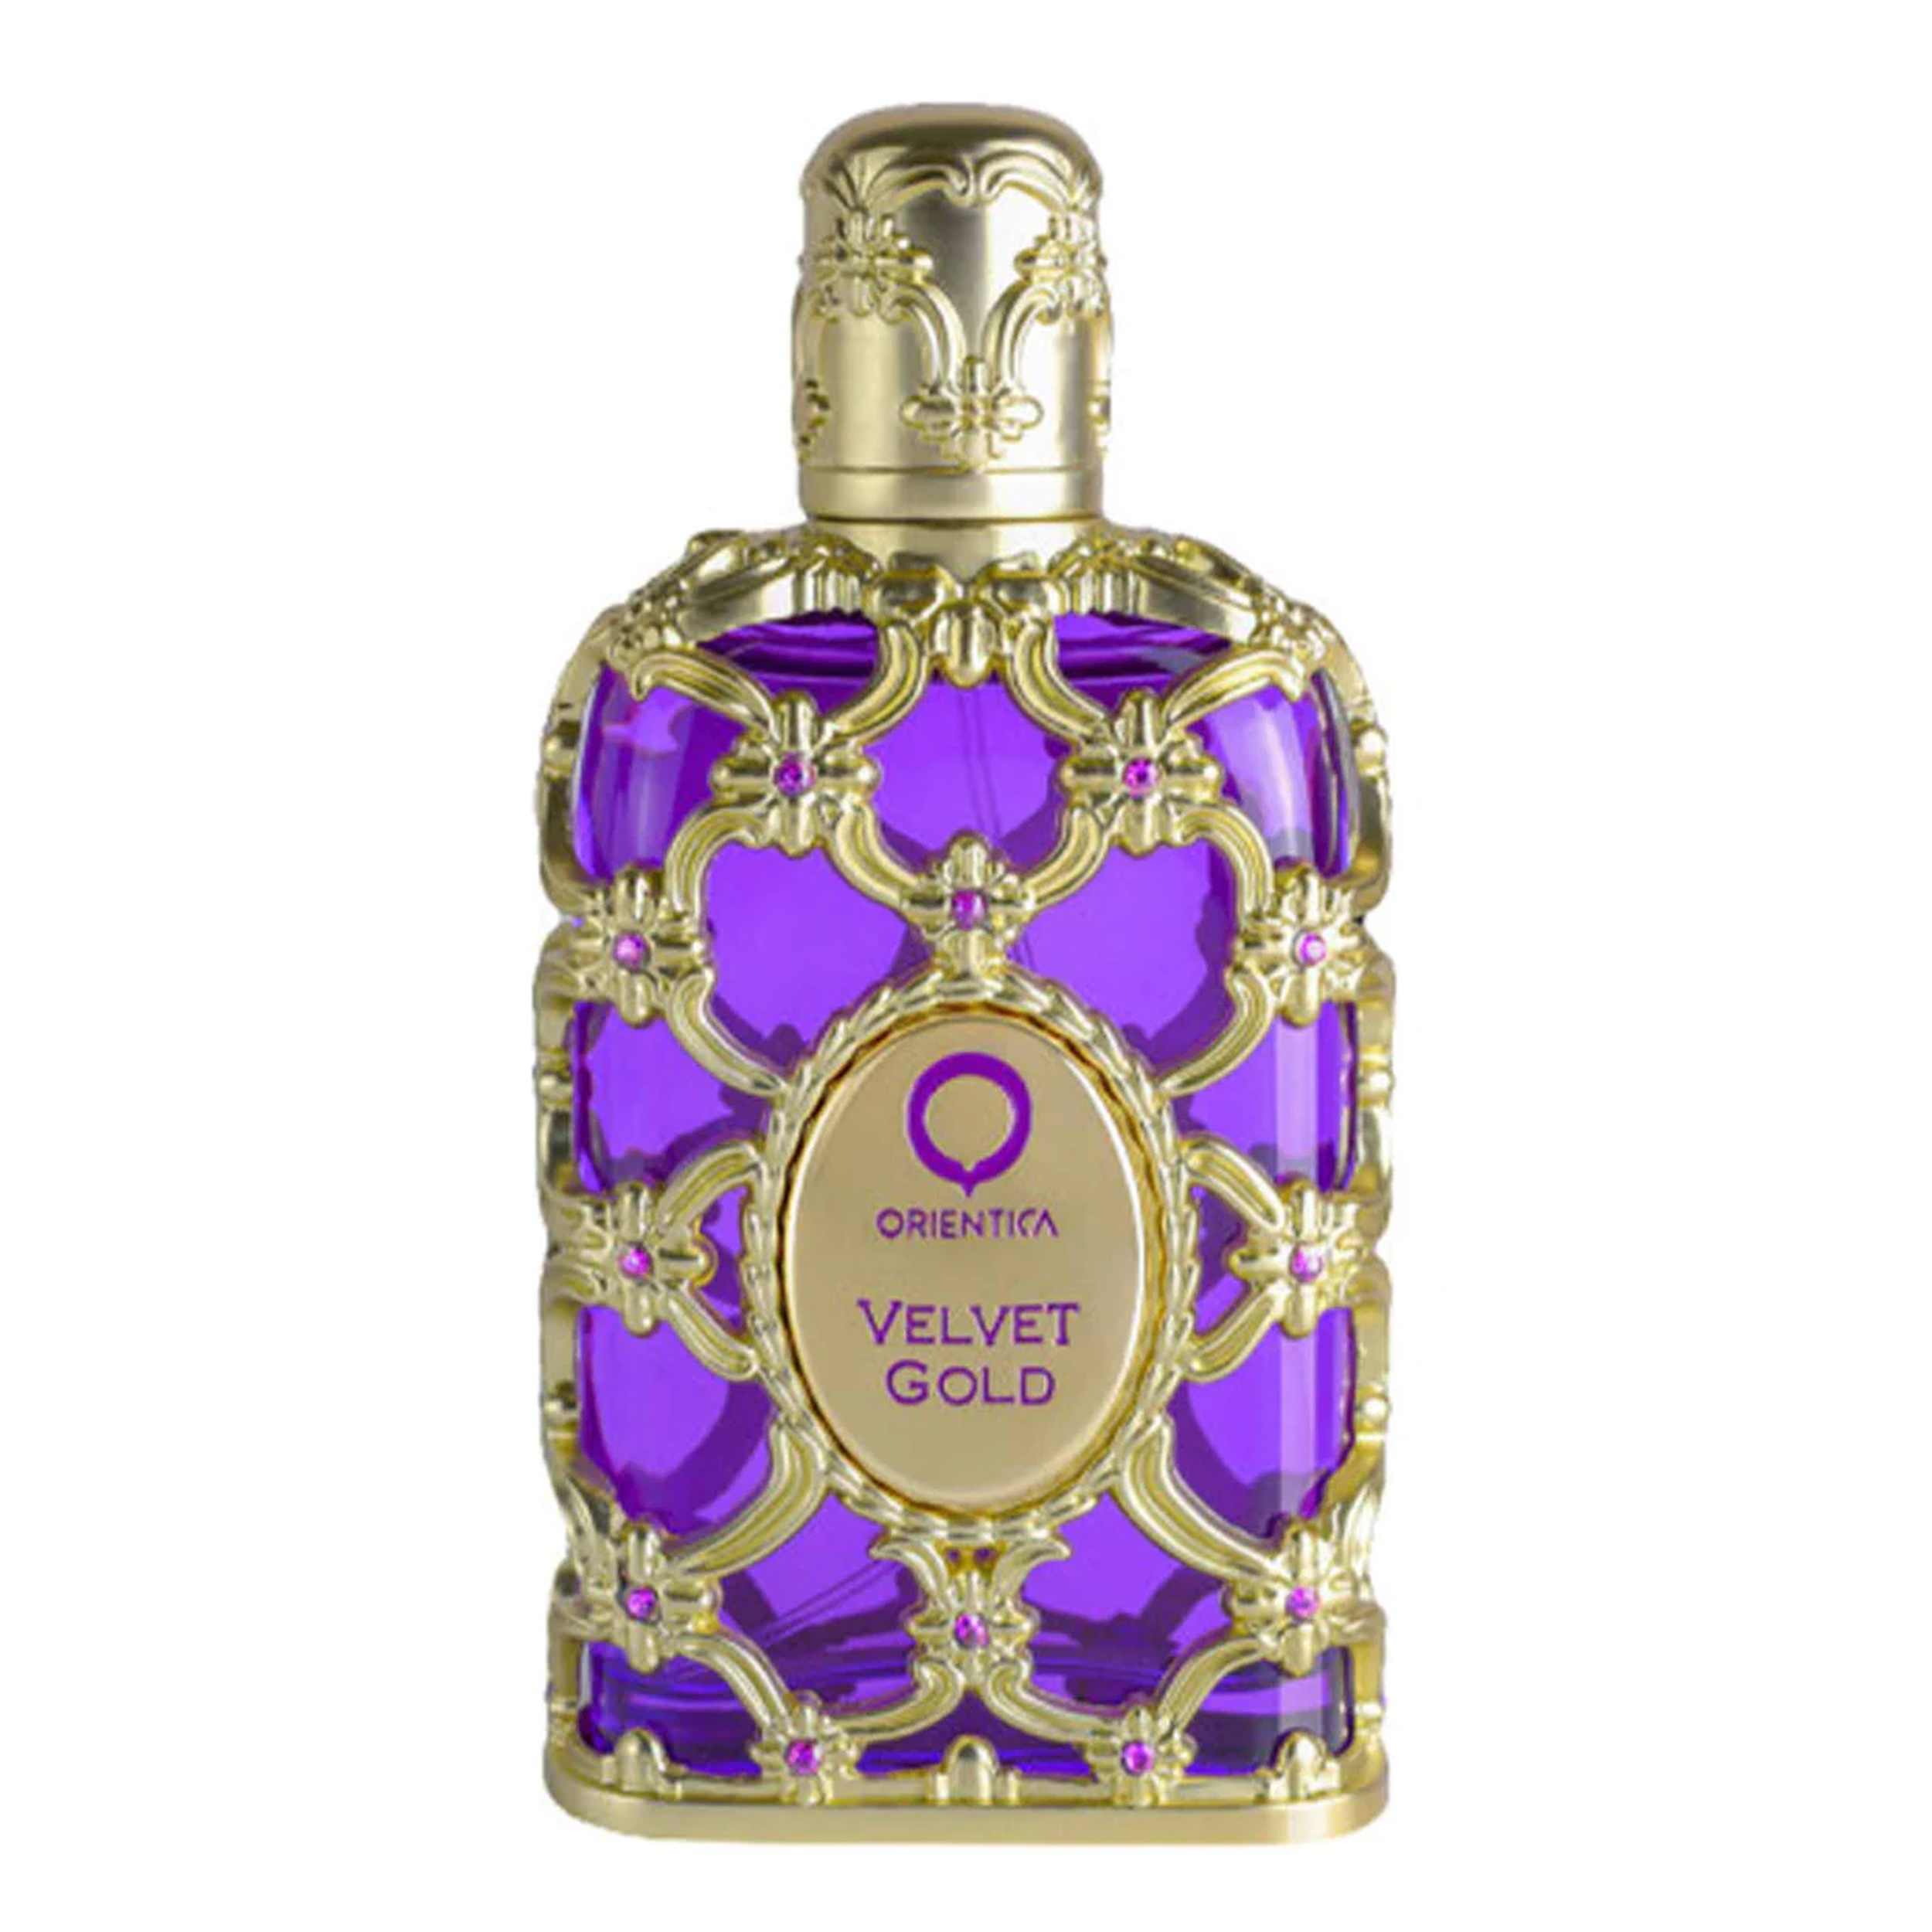 Perfume Velvet Gold Orientica   (Replica Con Fragancia Importada)- Mujer